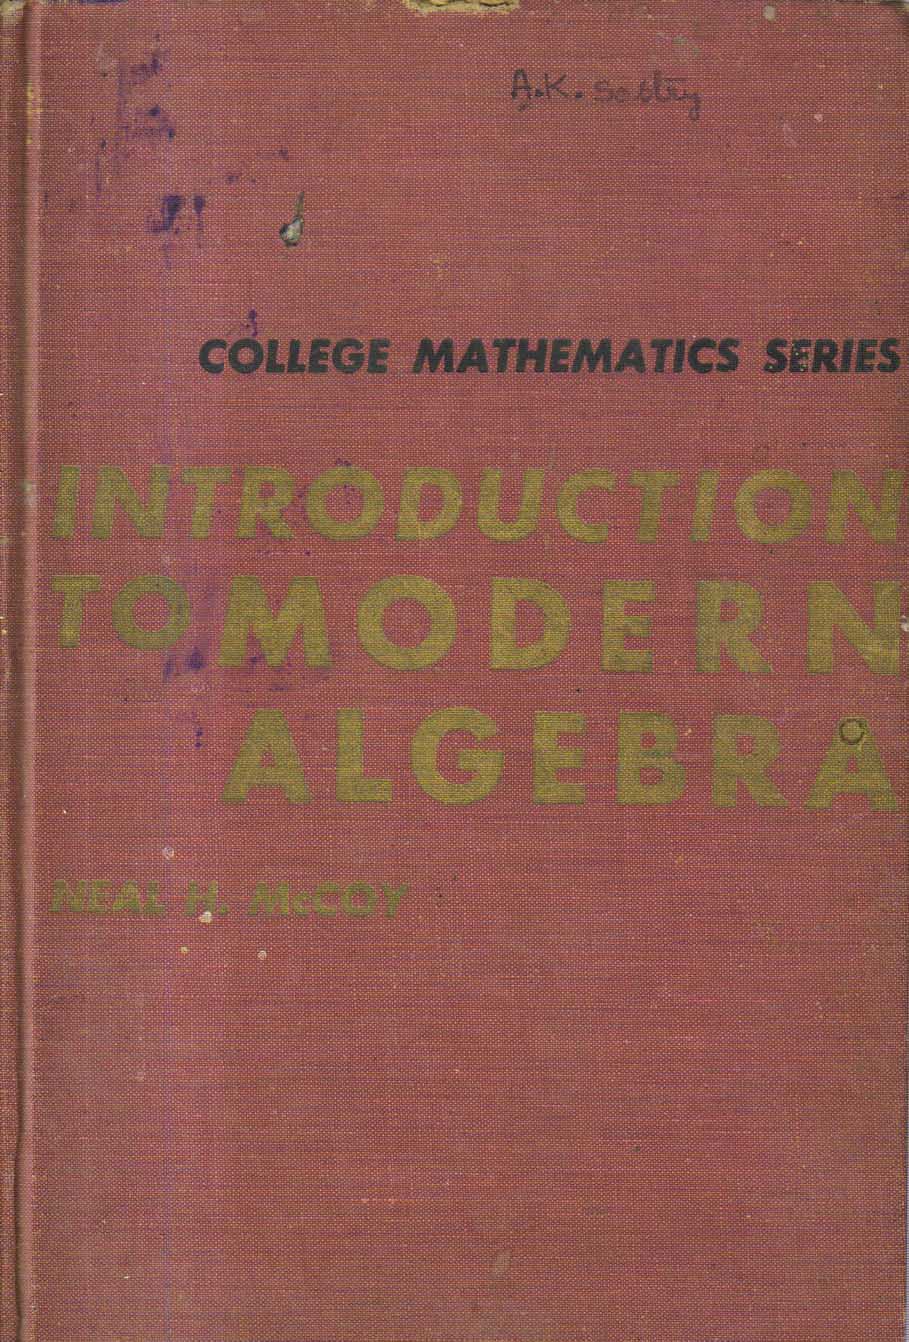 Introduction to Modern Algebra.